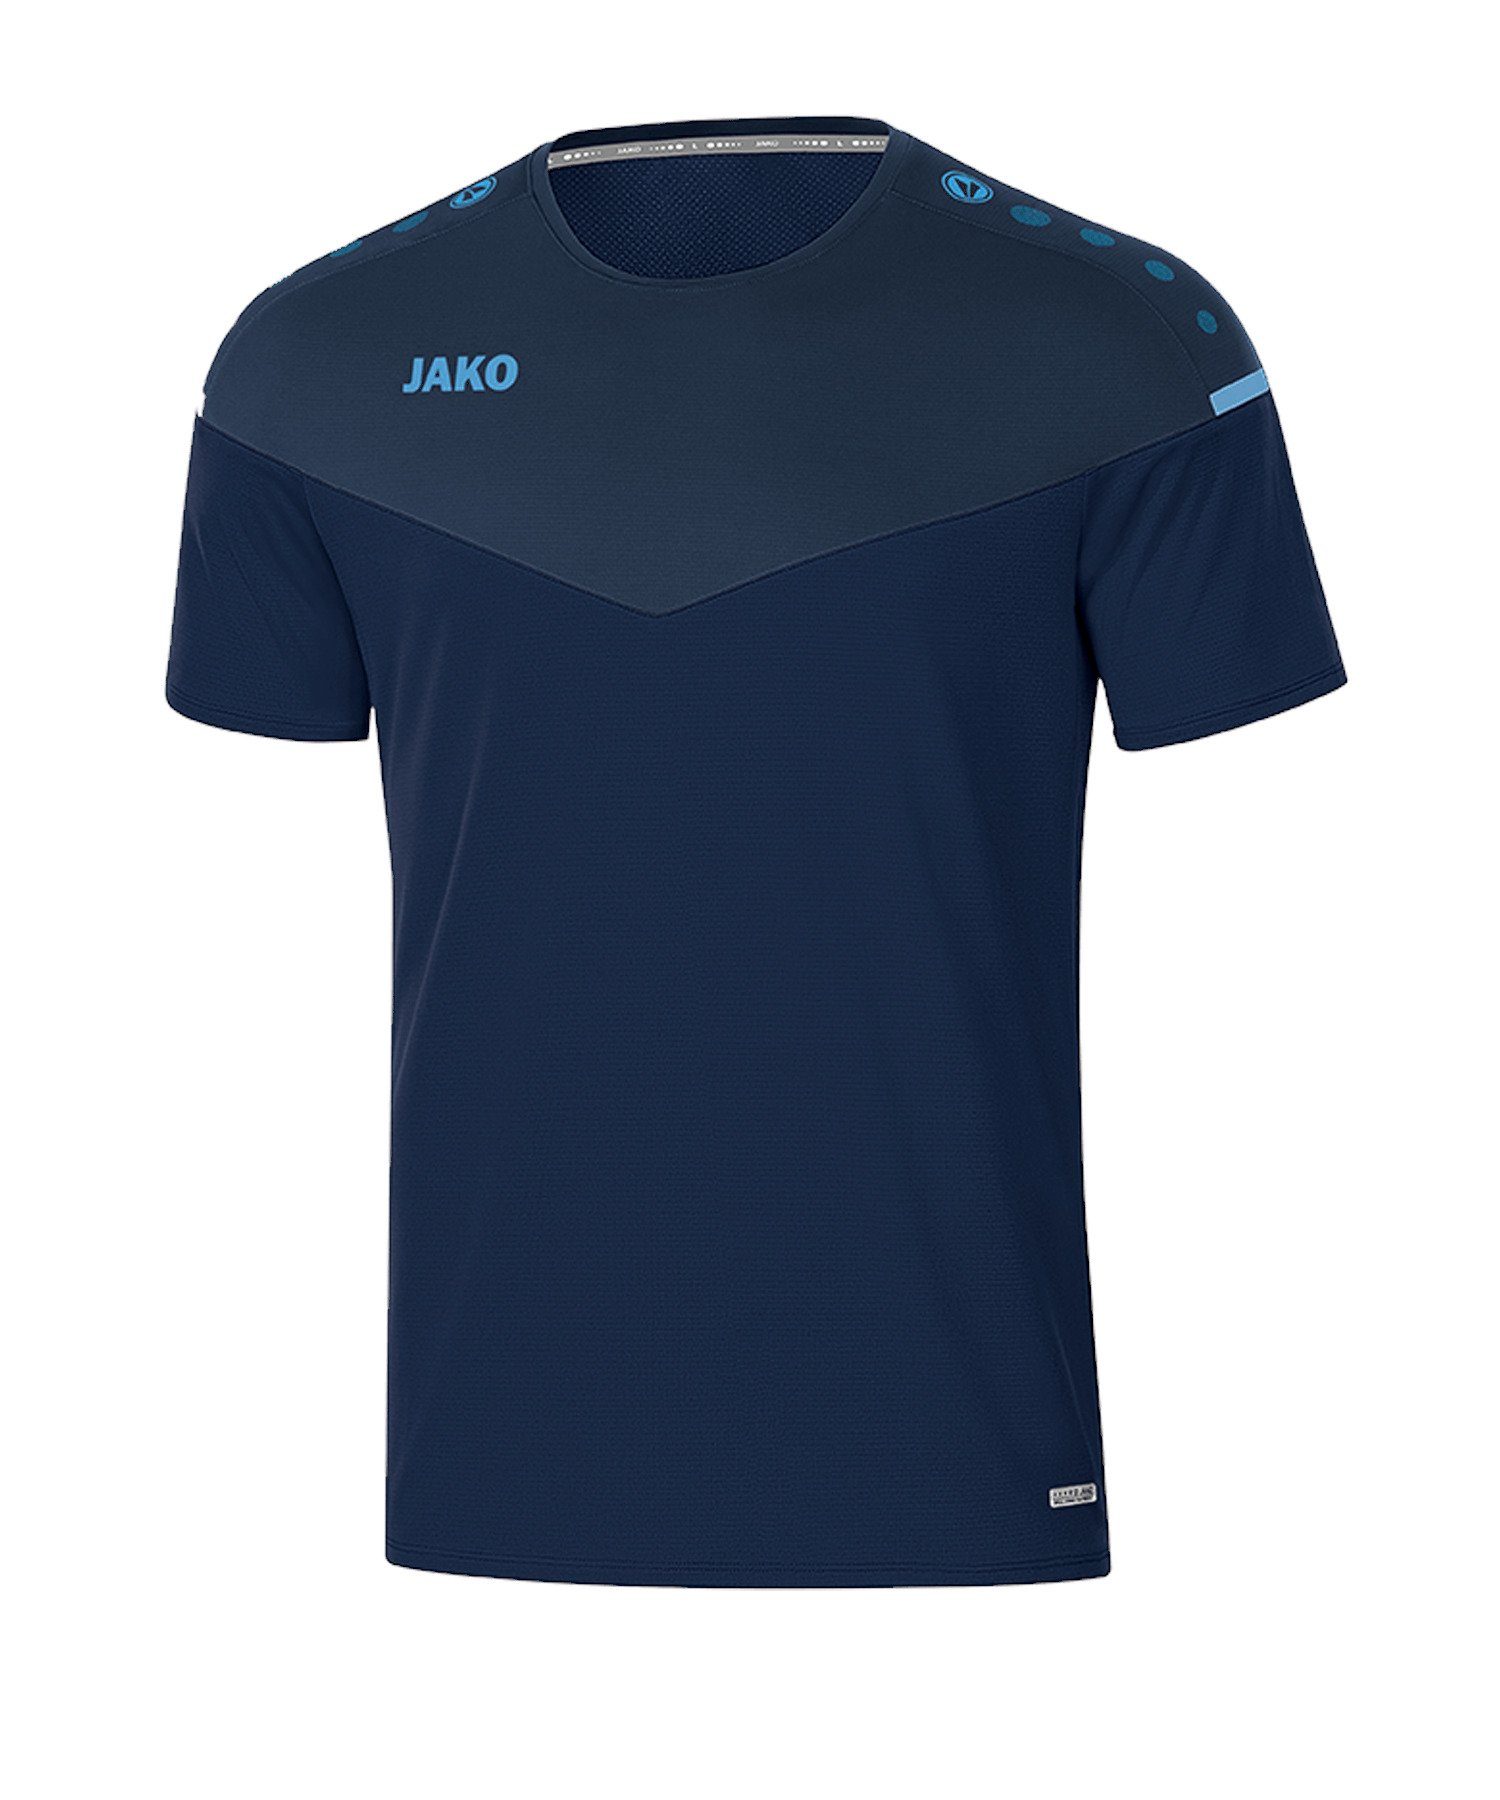 2.0 T-Shirt blau Champ default T-Shirt Jako